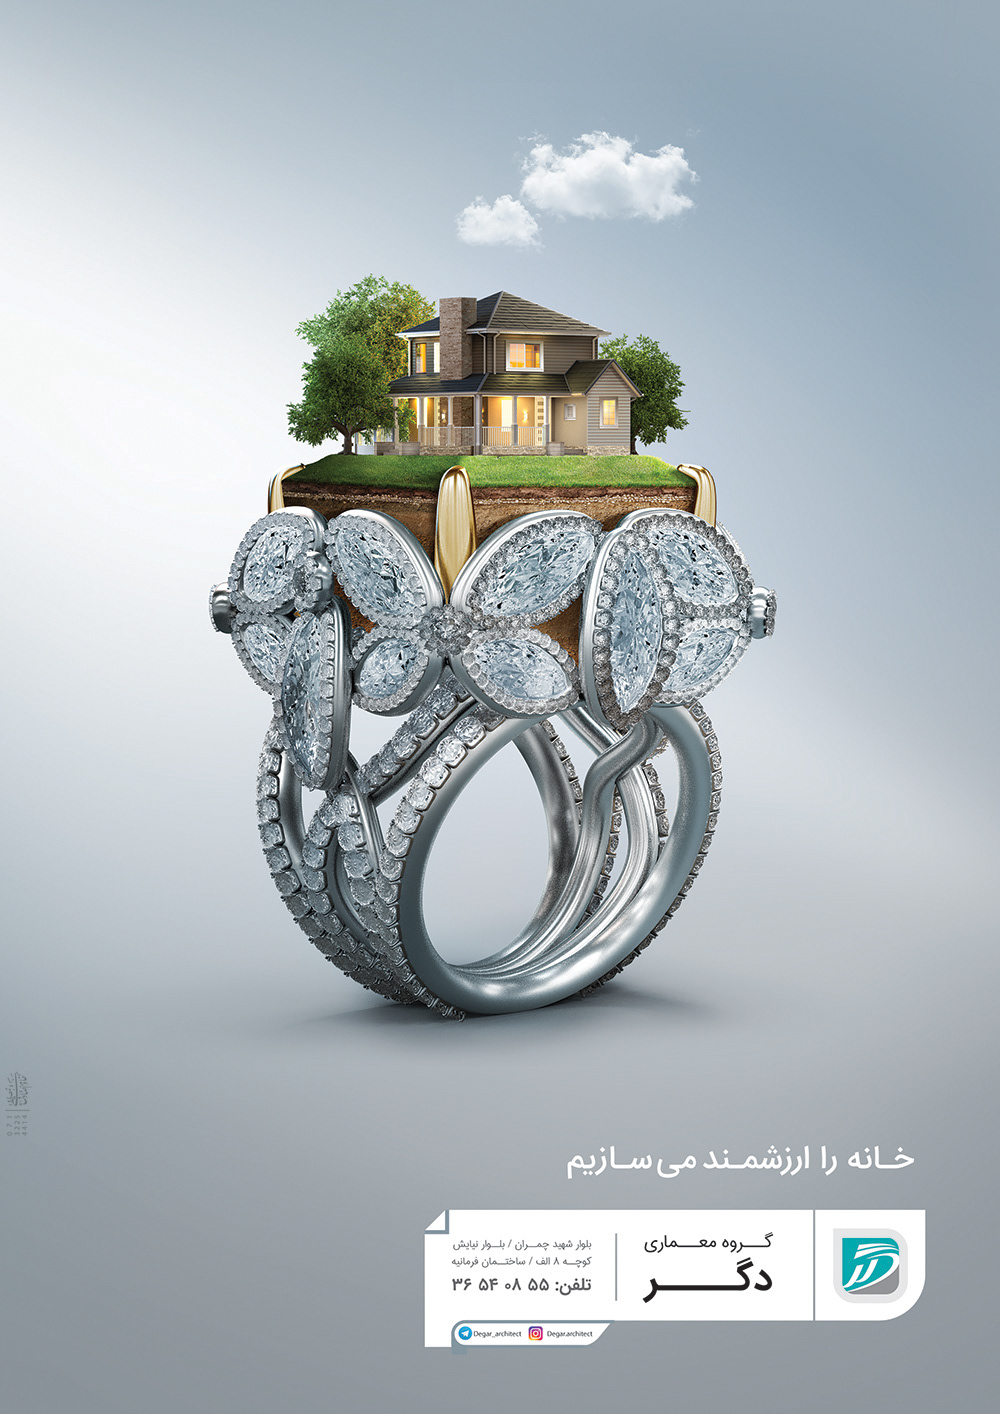 Advertising  retouch building house jewellry architect architecture creative manipulation Photo Manipulation 